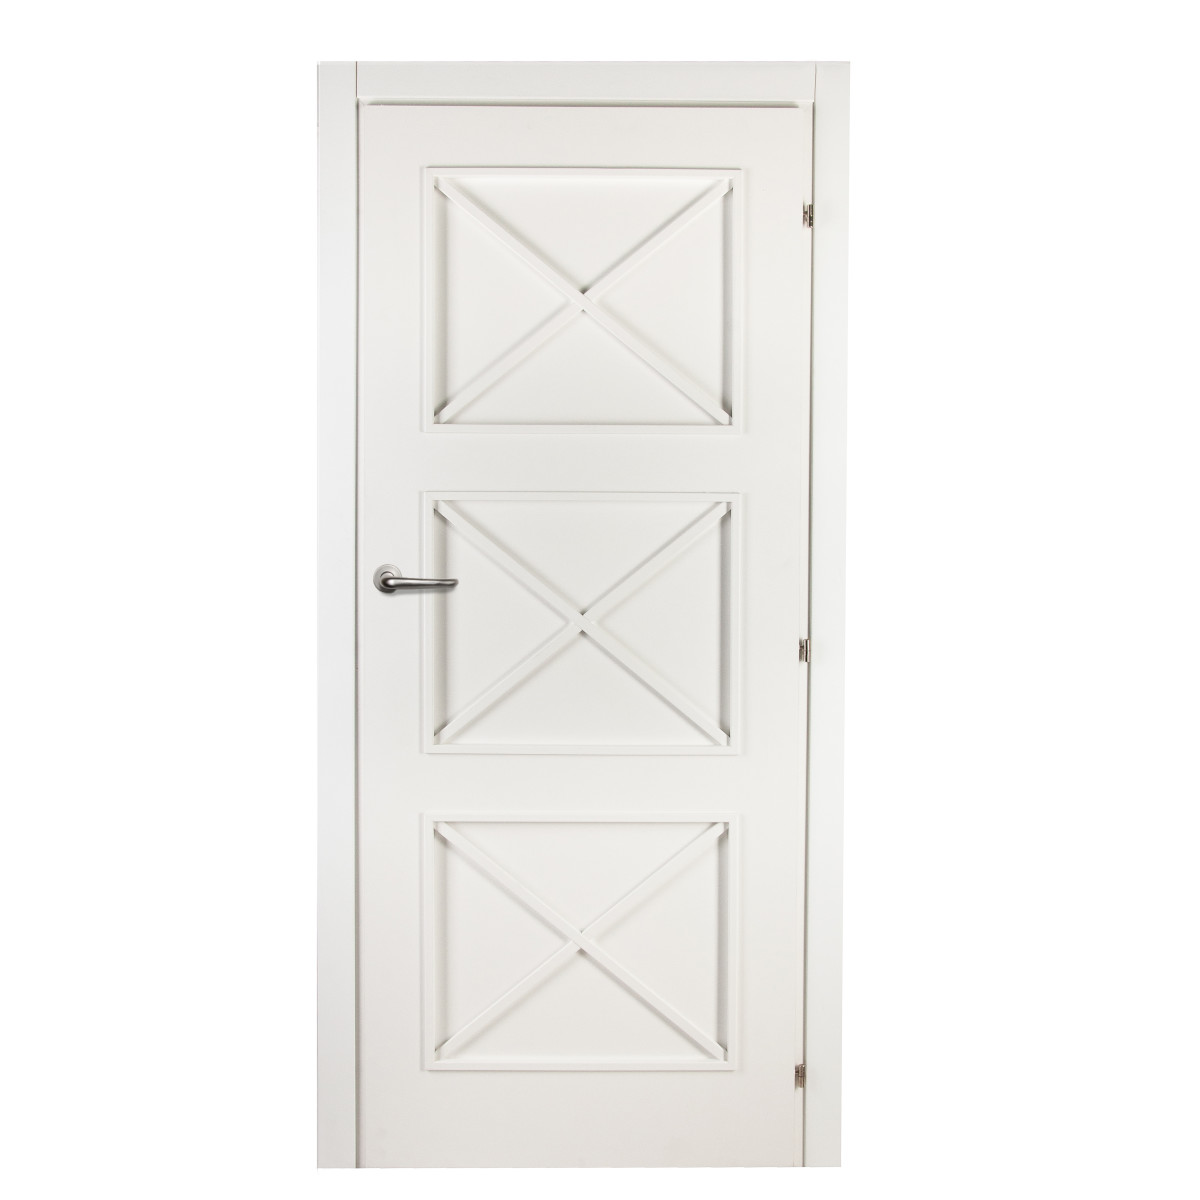 Дверь межкомнатная Камелия 70х200 см, цвет белый, с фурнитурой